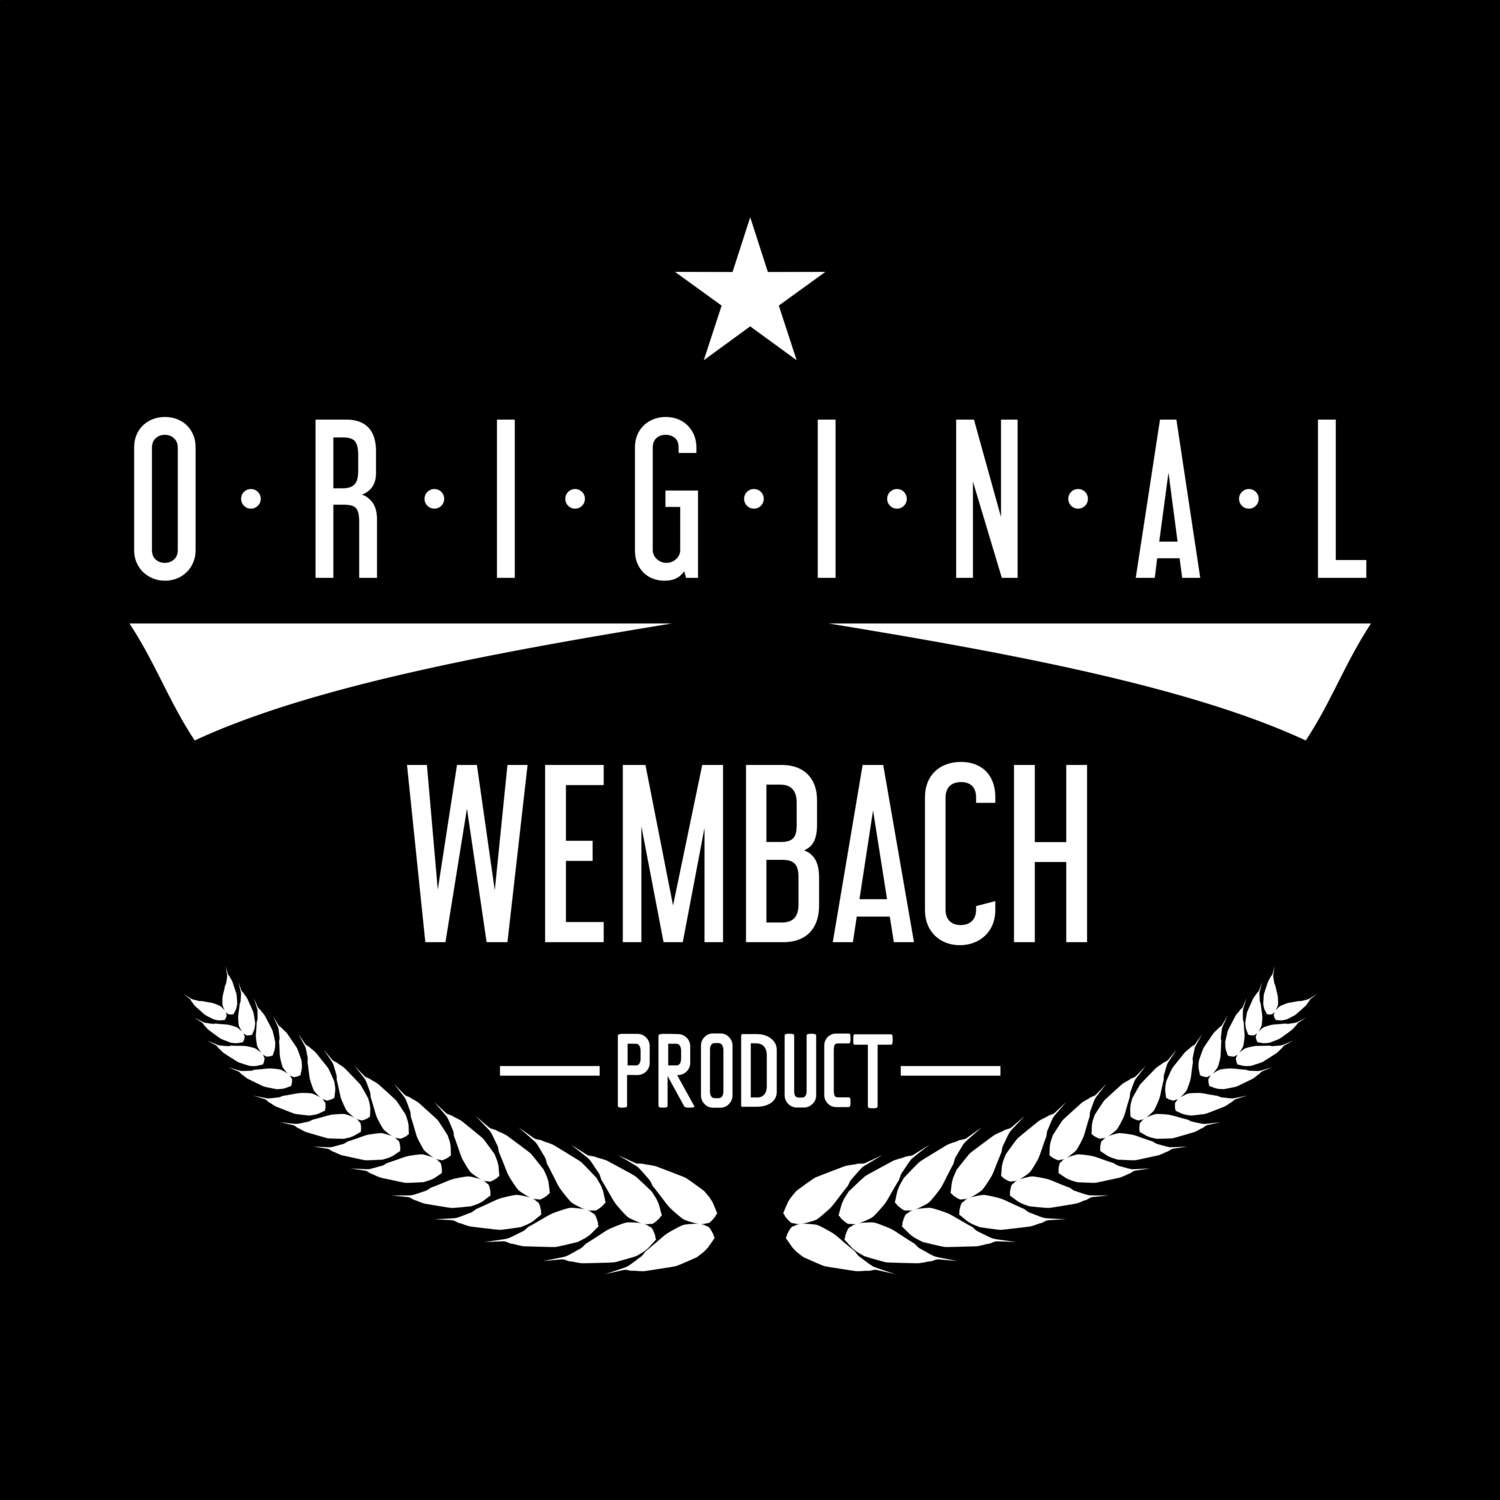 Wembach T-Shirt »Original Product«